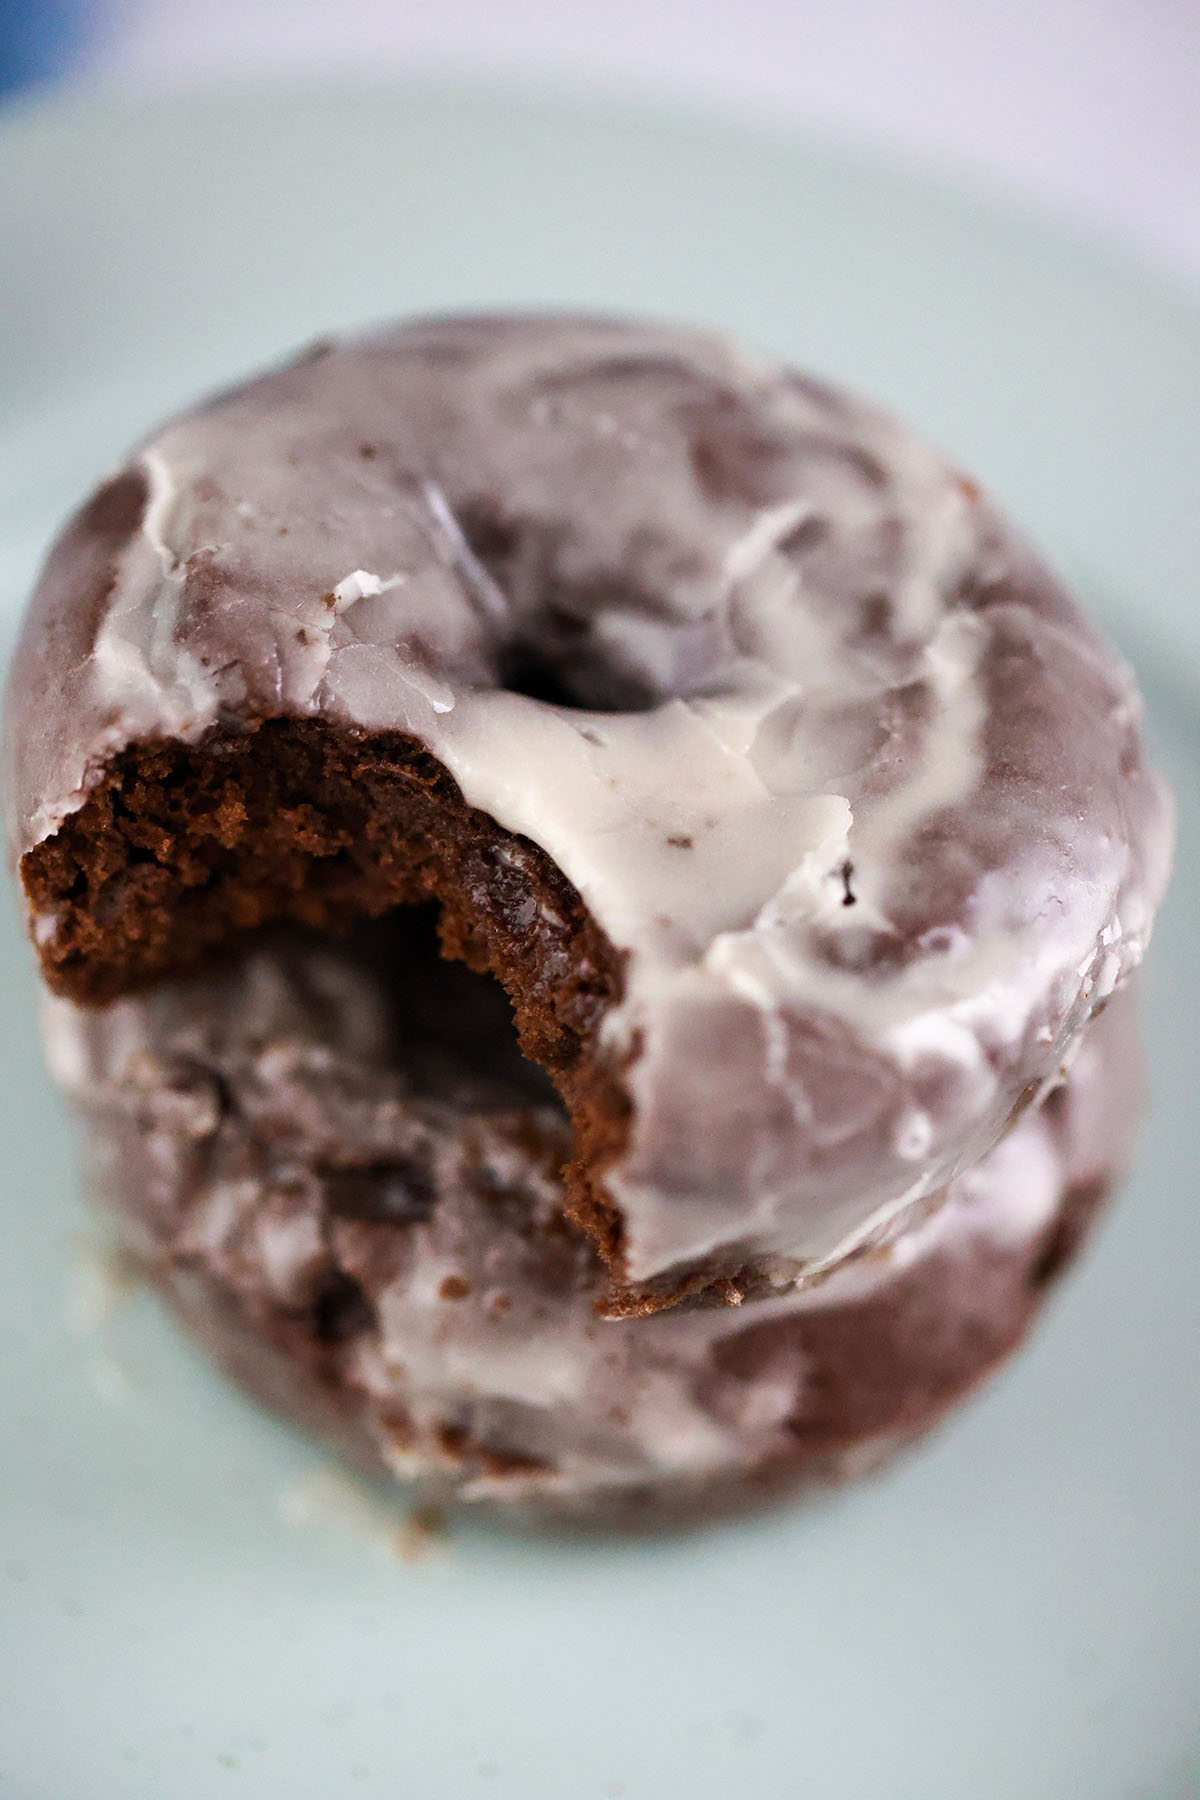 chocolate glazed donut from dunkin donuts